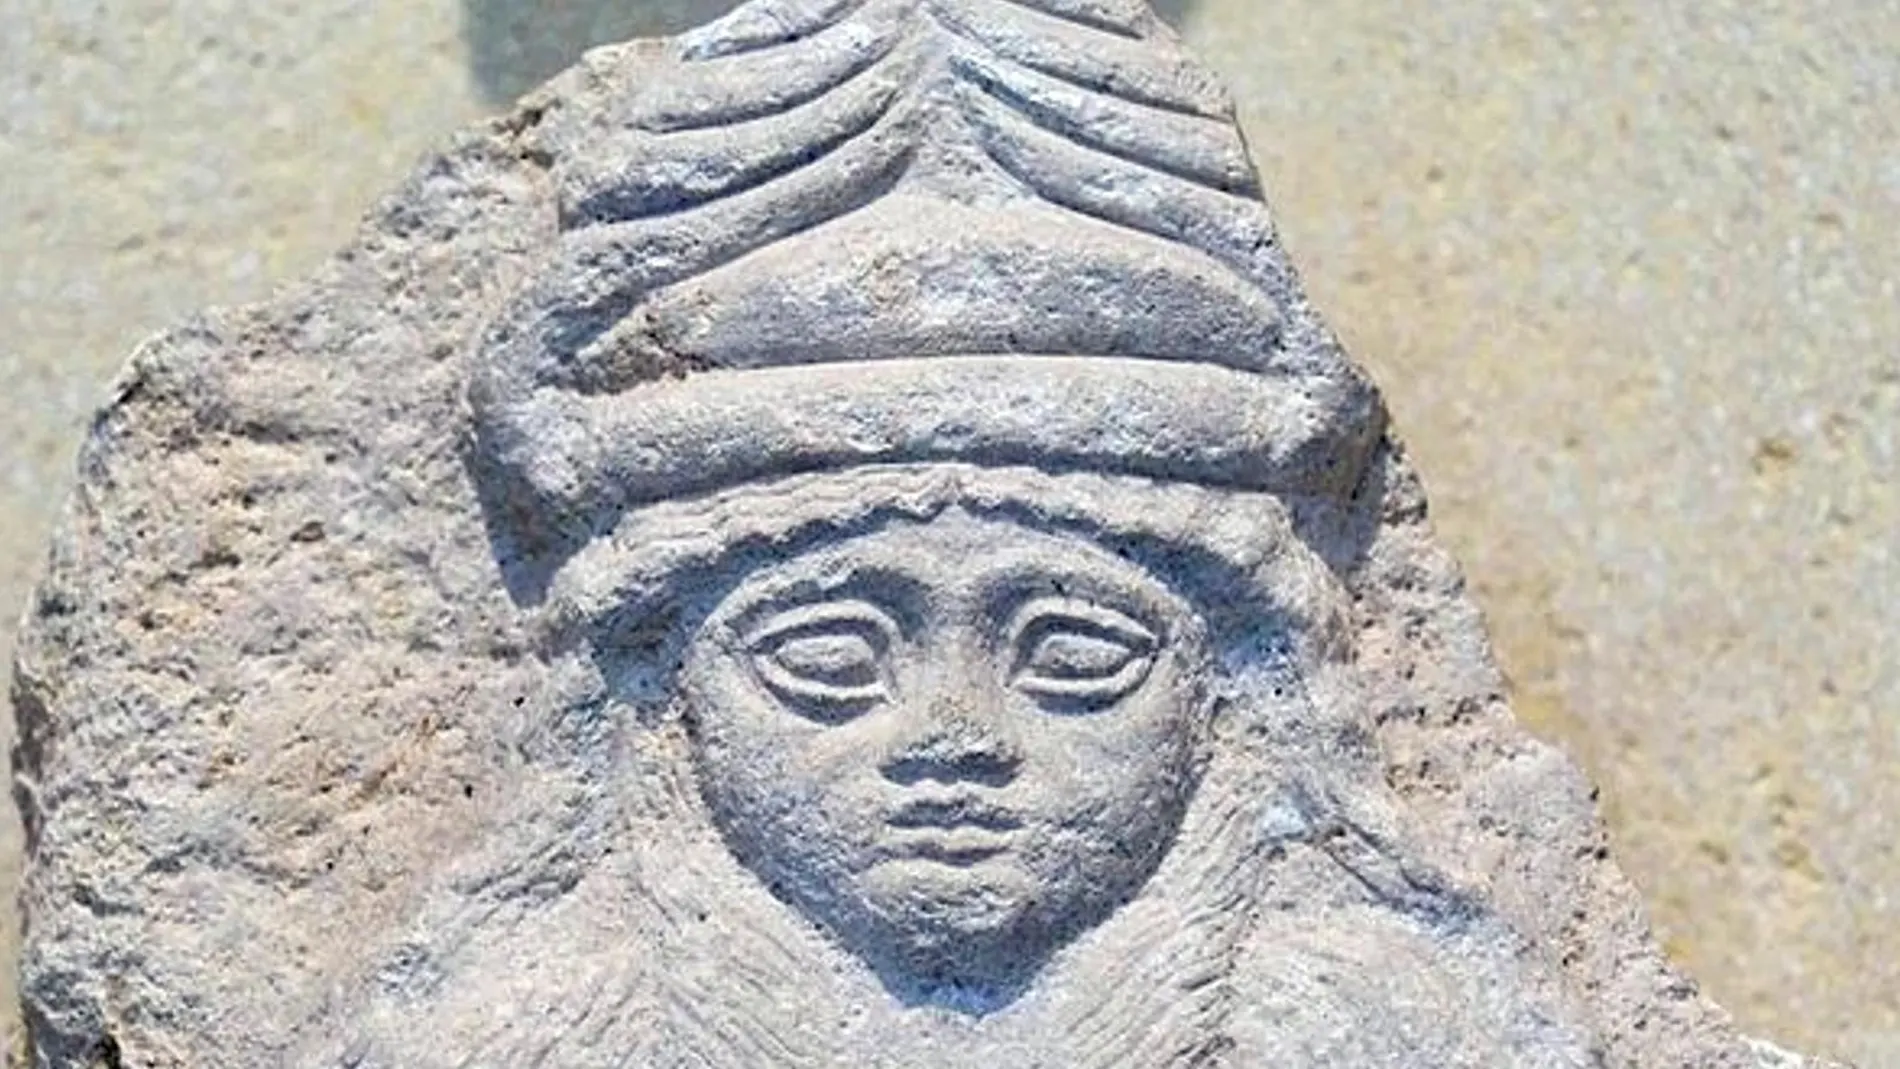 Posible busto de la diosa mesopotámica de la salud: Gula (2150-2100_a.C.)